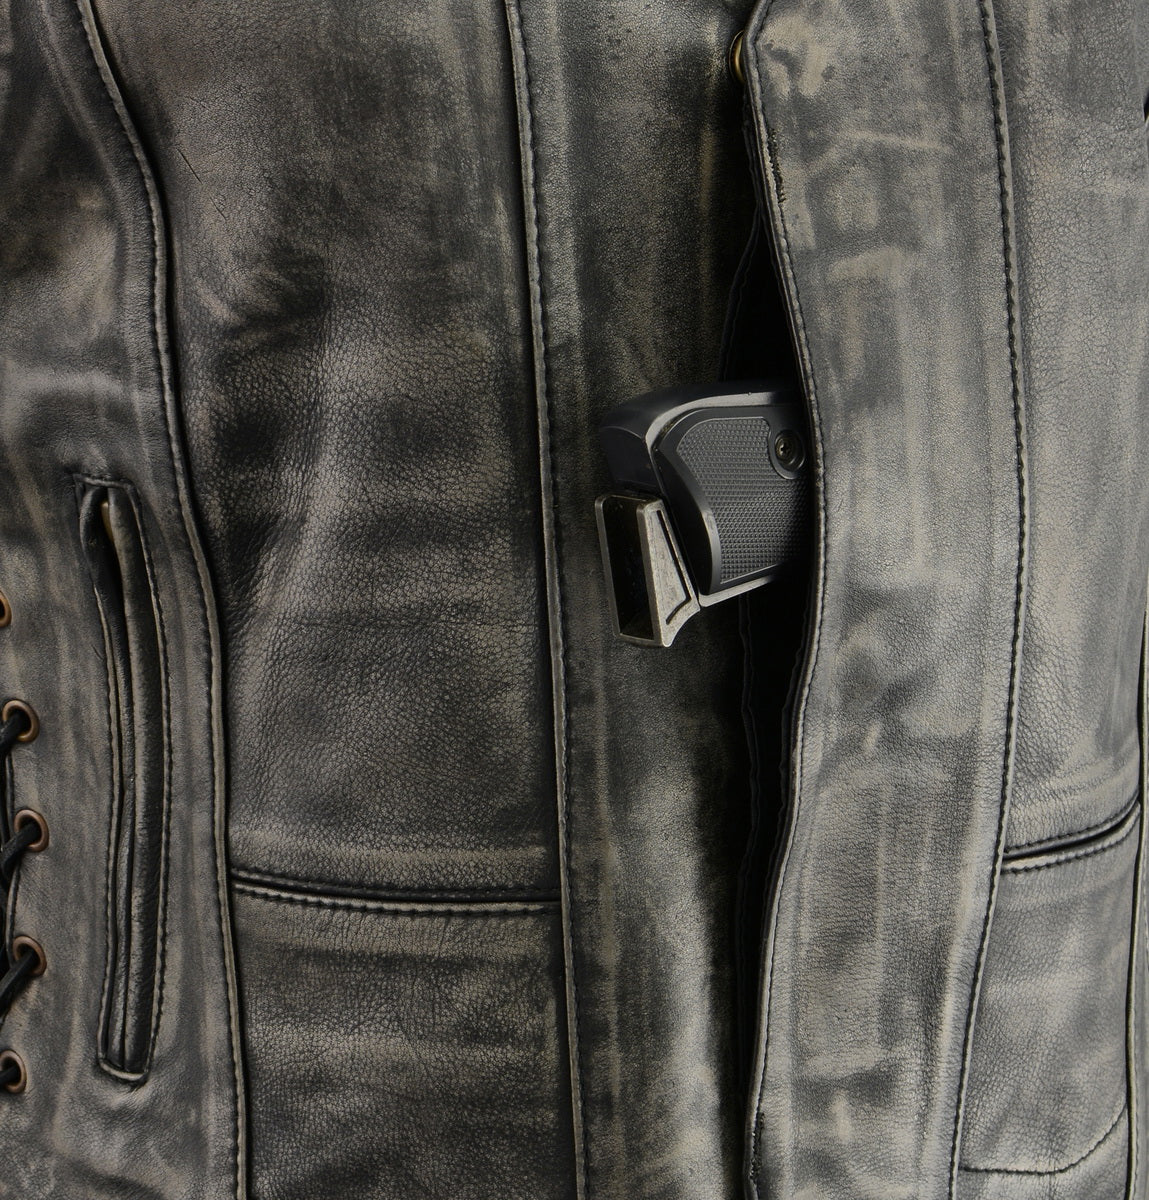 M Boss Motorcycle Apparel BOS24500 Ladies Leather Distressed Brown 6 Pocket Vest